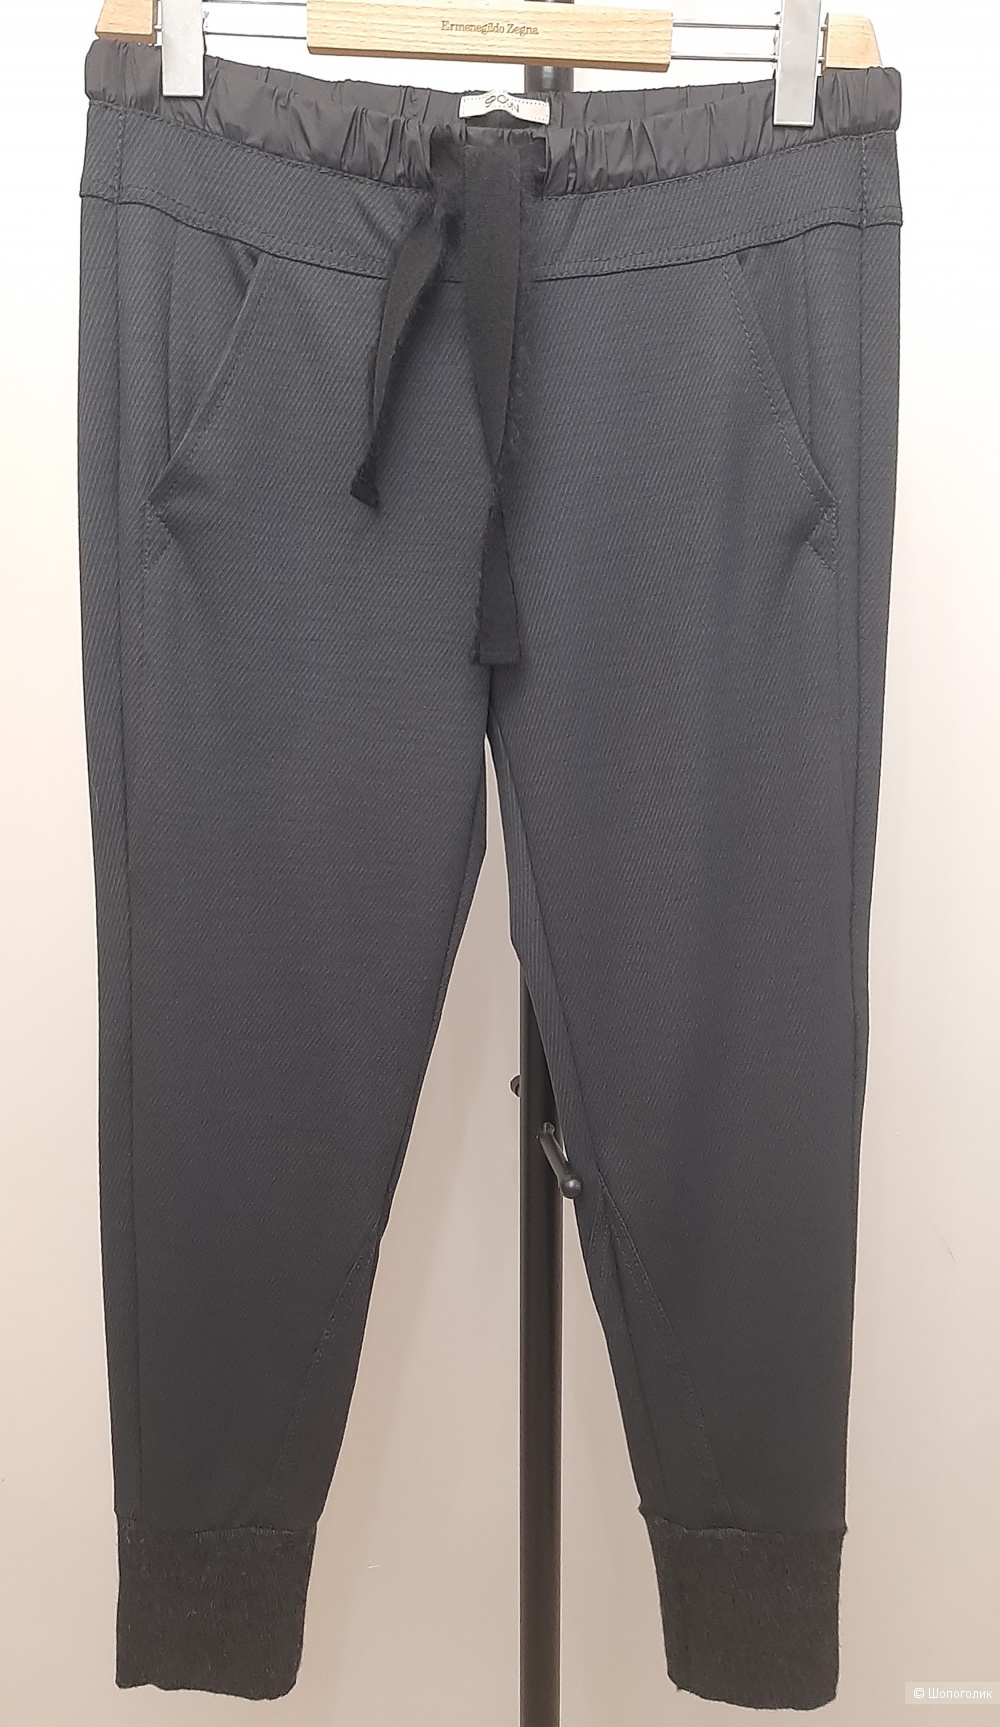 Шерстяные брюки SPOON Golf, W27 (44)